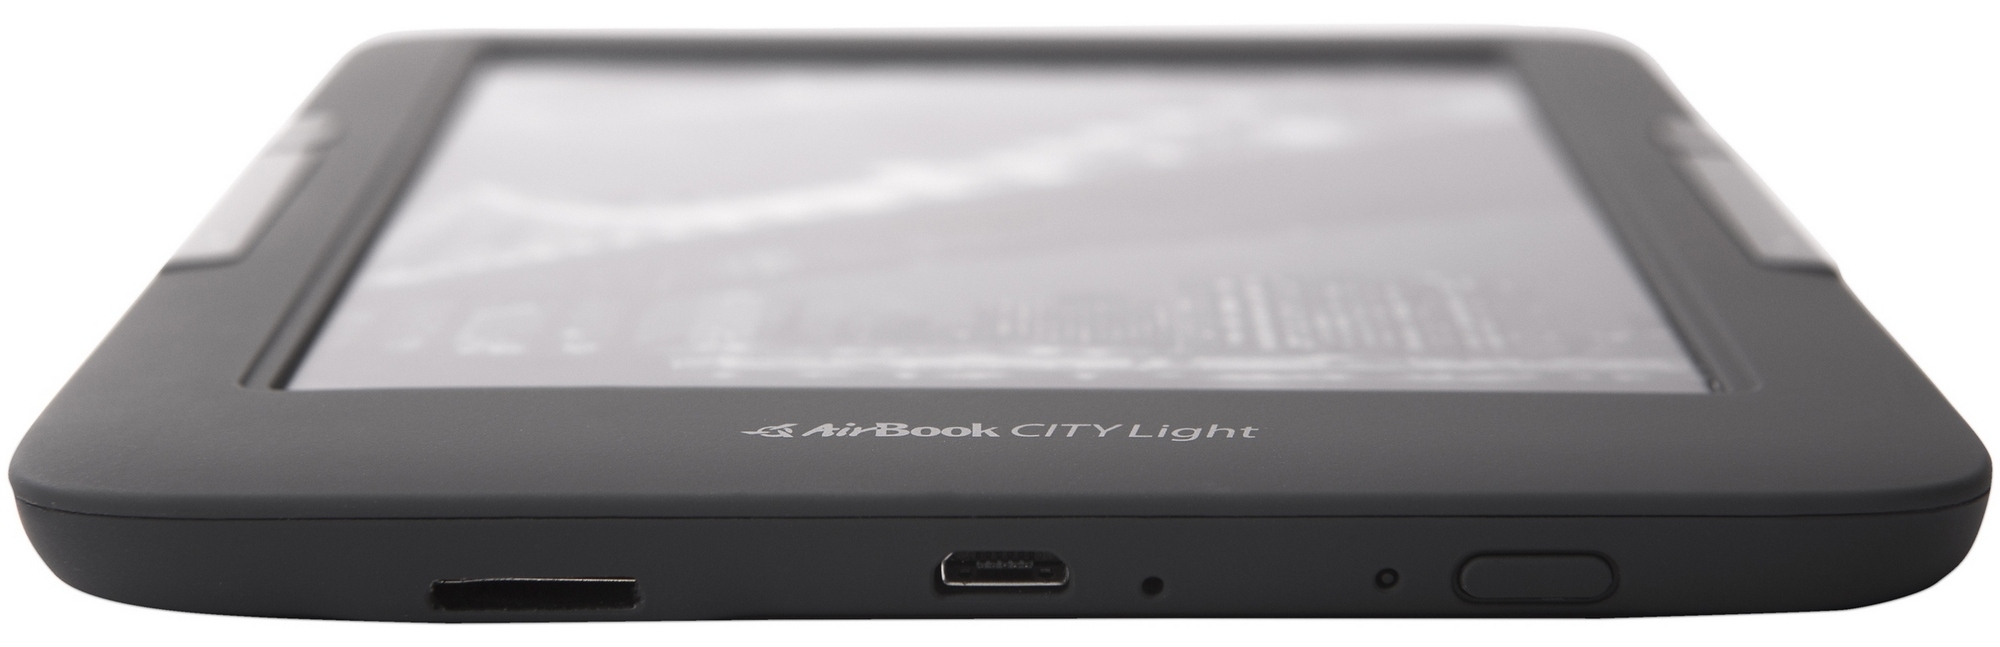 Електронна книга AirBook City Light Touch - зображення 4